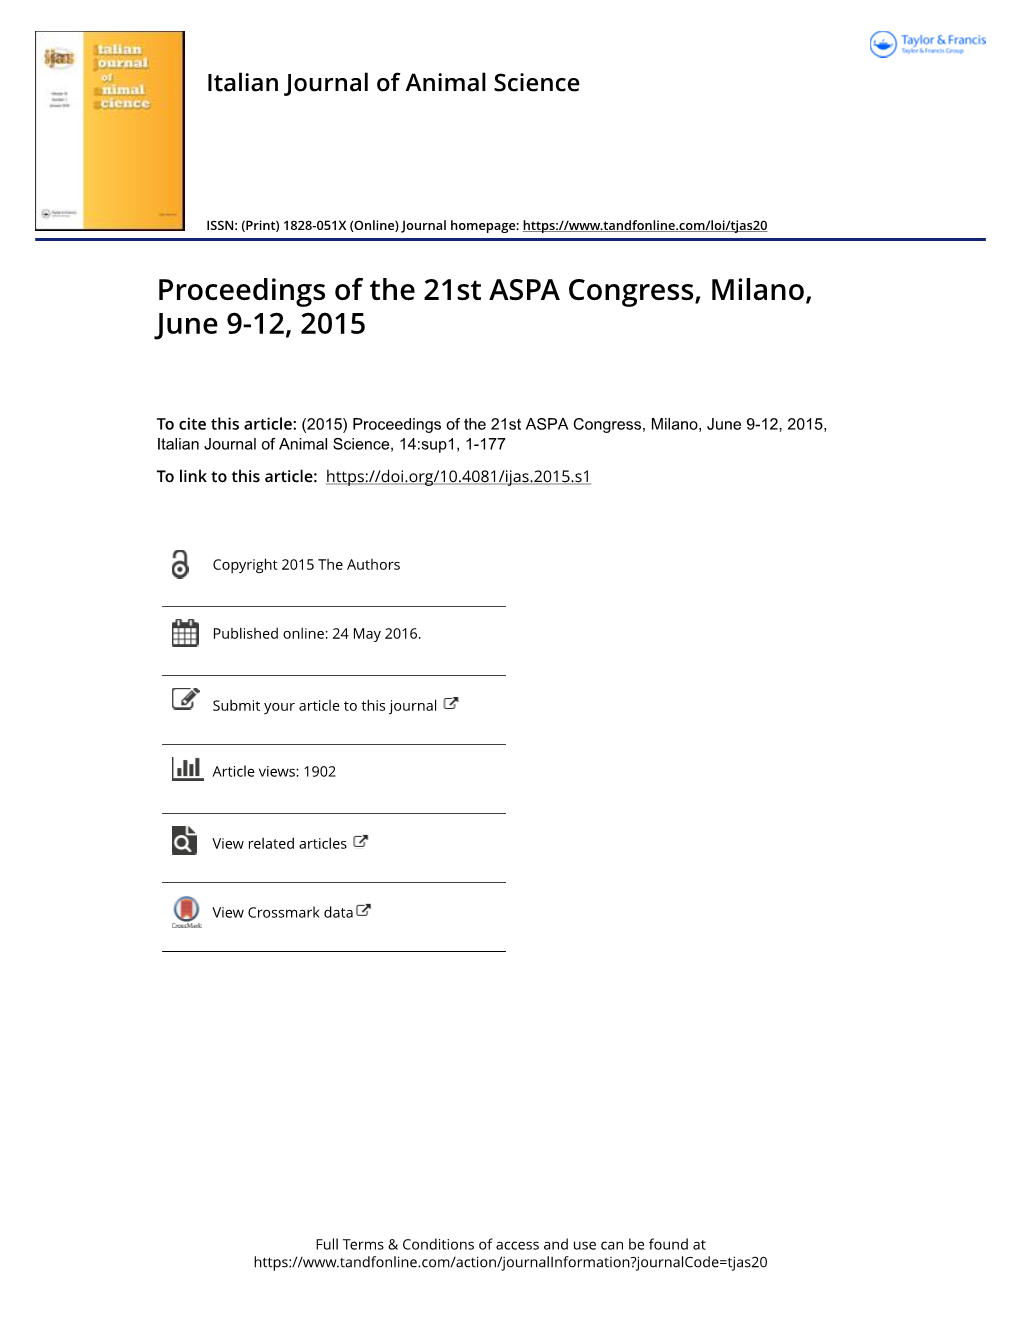 Proceedings of the 21St ASPA Congress, Milano, June 9-12, 2015